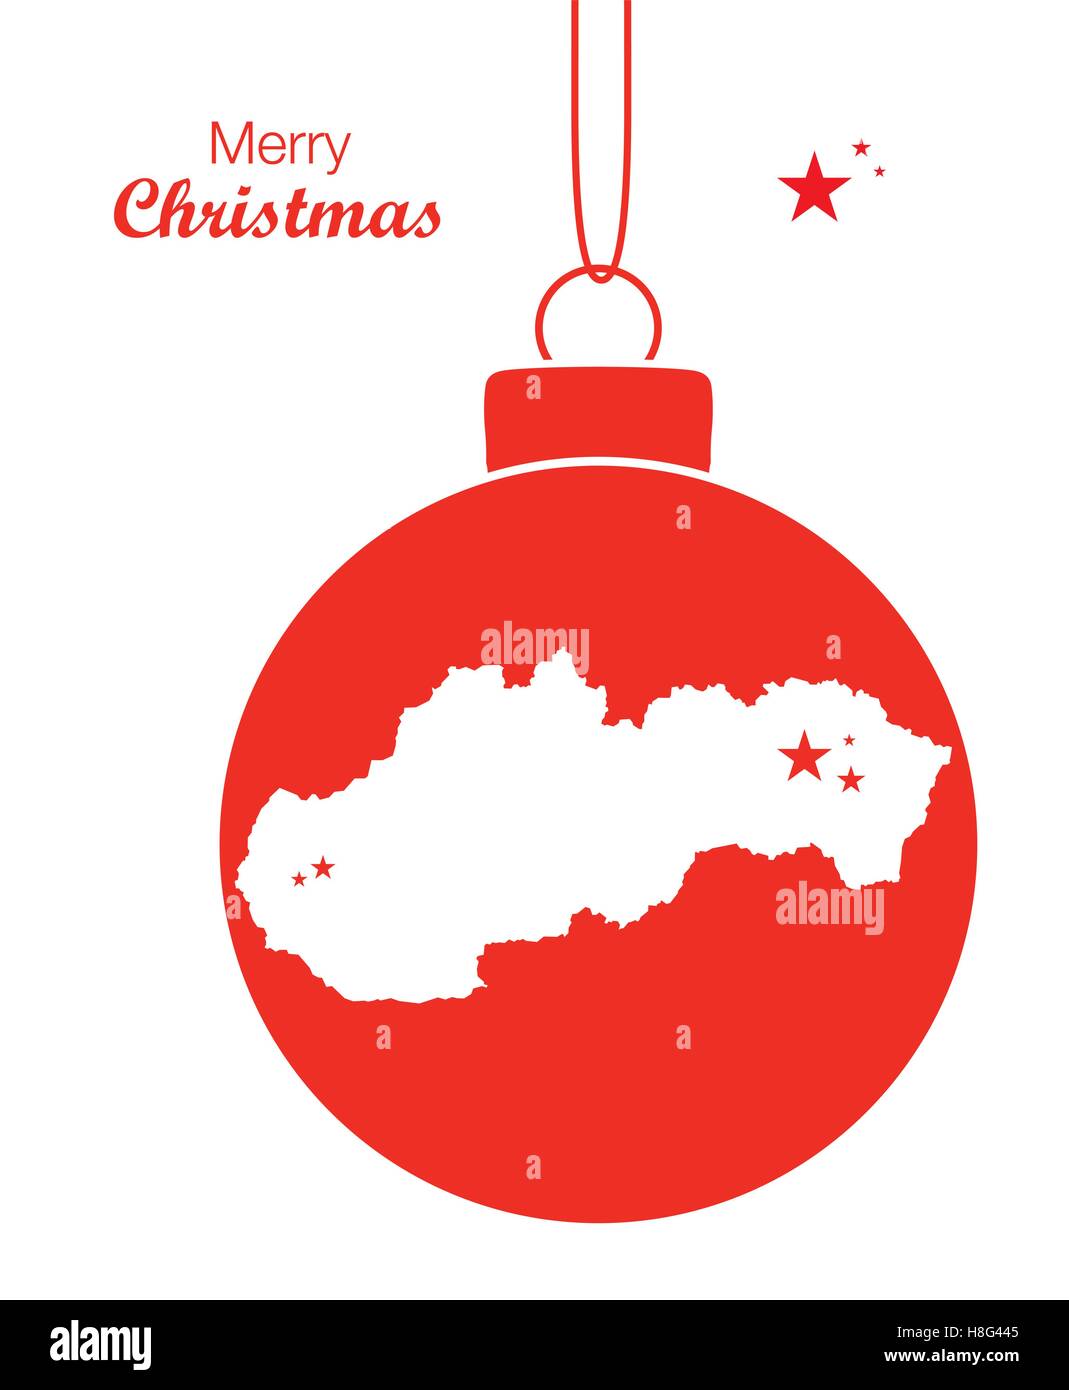 Merry Christmas Map Slovakia Stock Vector